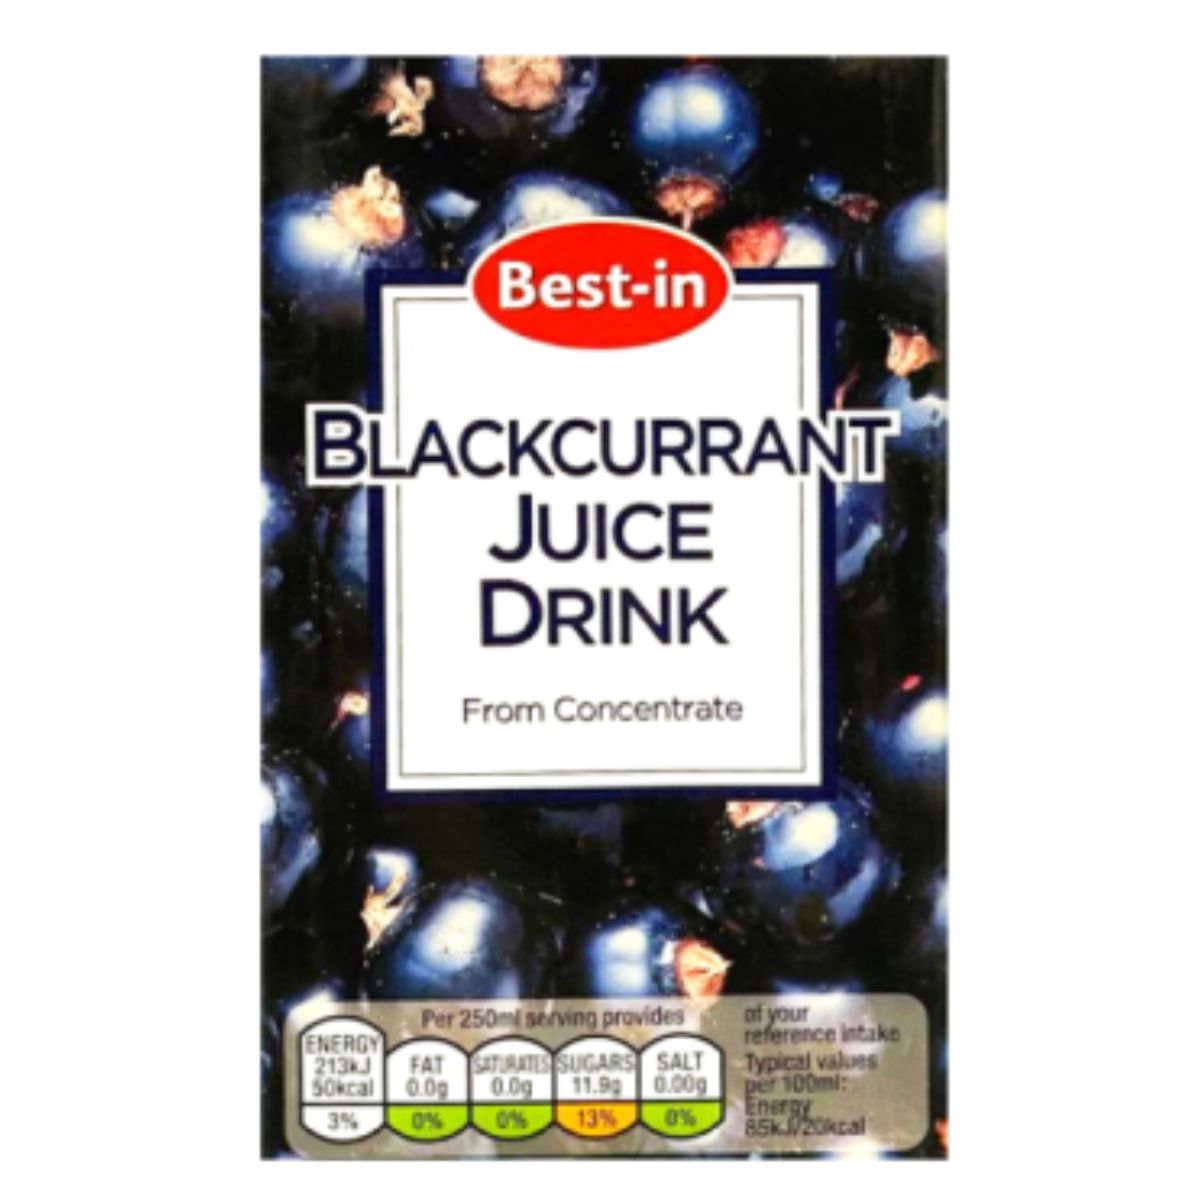 Best In - Blackcurrant Juice Drink - 250ml is the best blackcurrant juice drink.